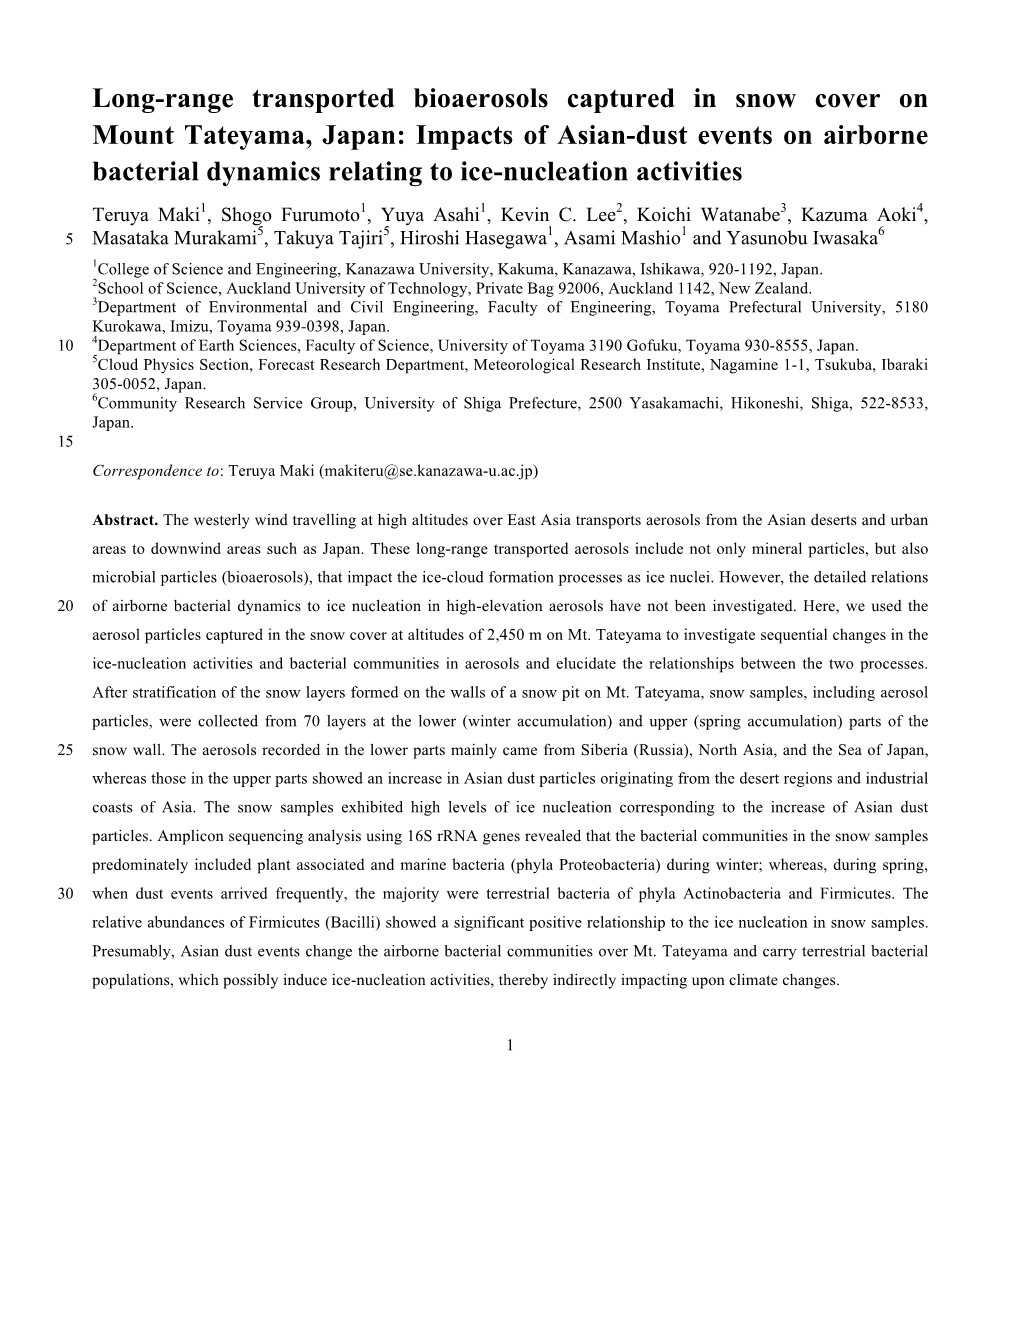 Impacts of Asian-Dust Events on Airborne Bacterial Dynamics Relating to Ice-Nucleation Activities Teruya Maki1, Shogo Furumoto1, Yuya Asahi1, Kevin C